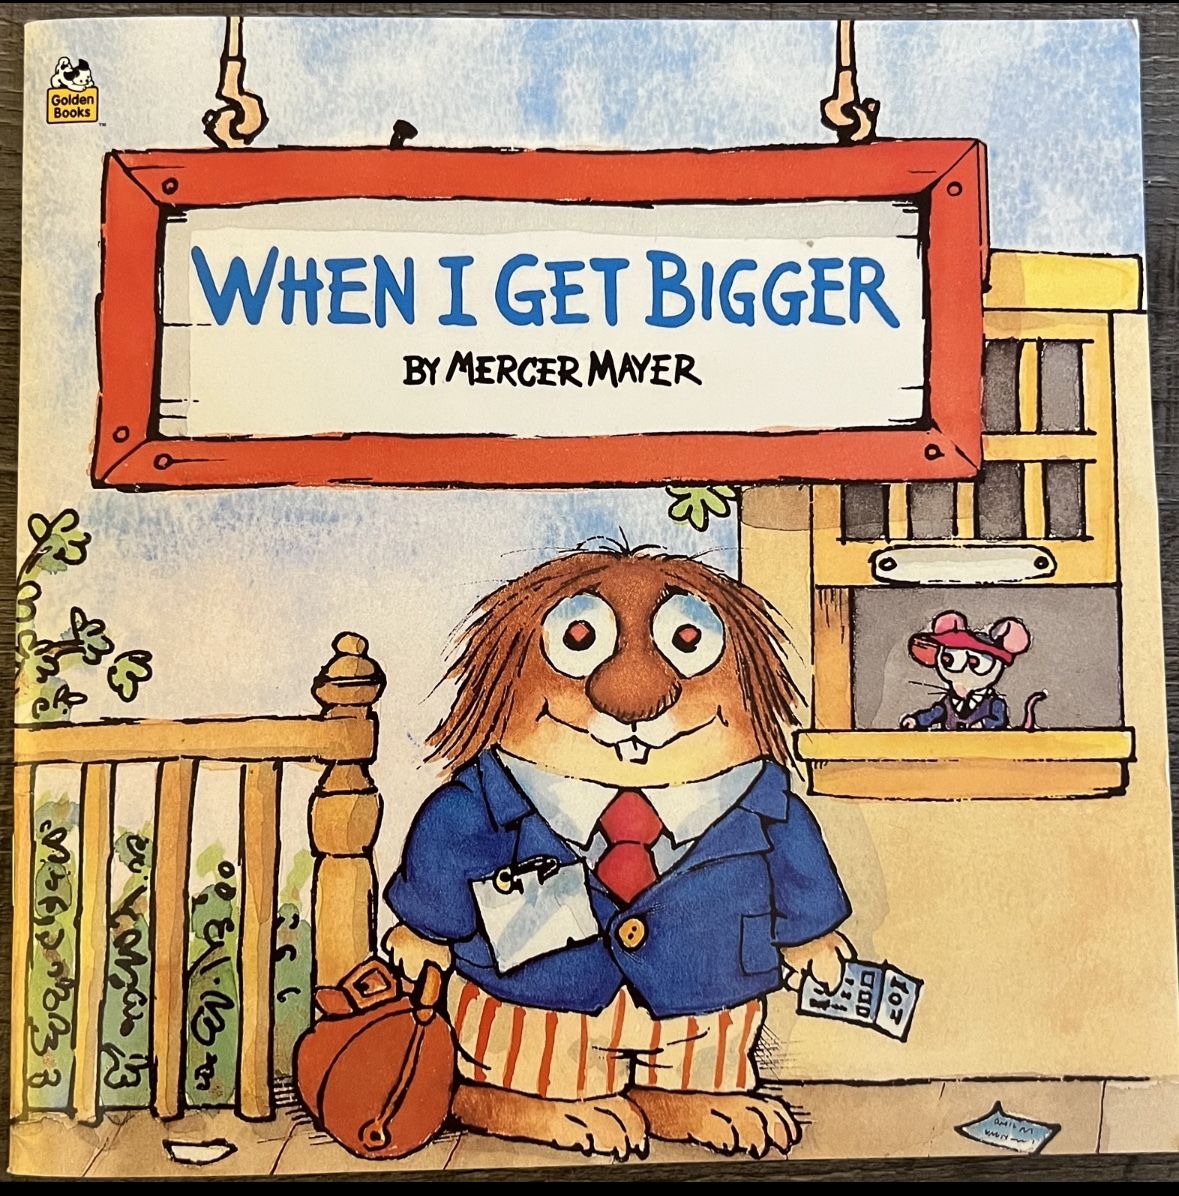 New Little Critter “When I Get Bigger” Story Book